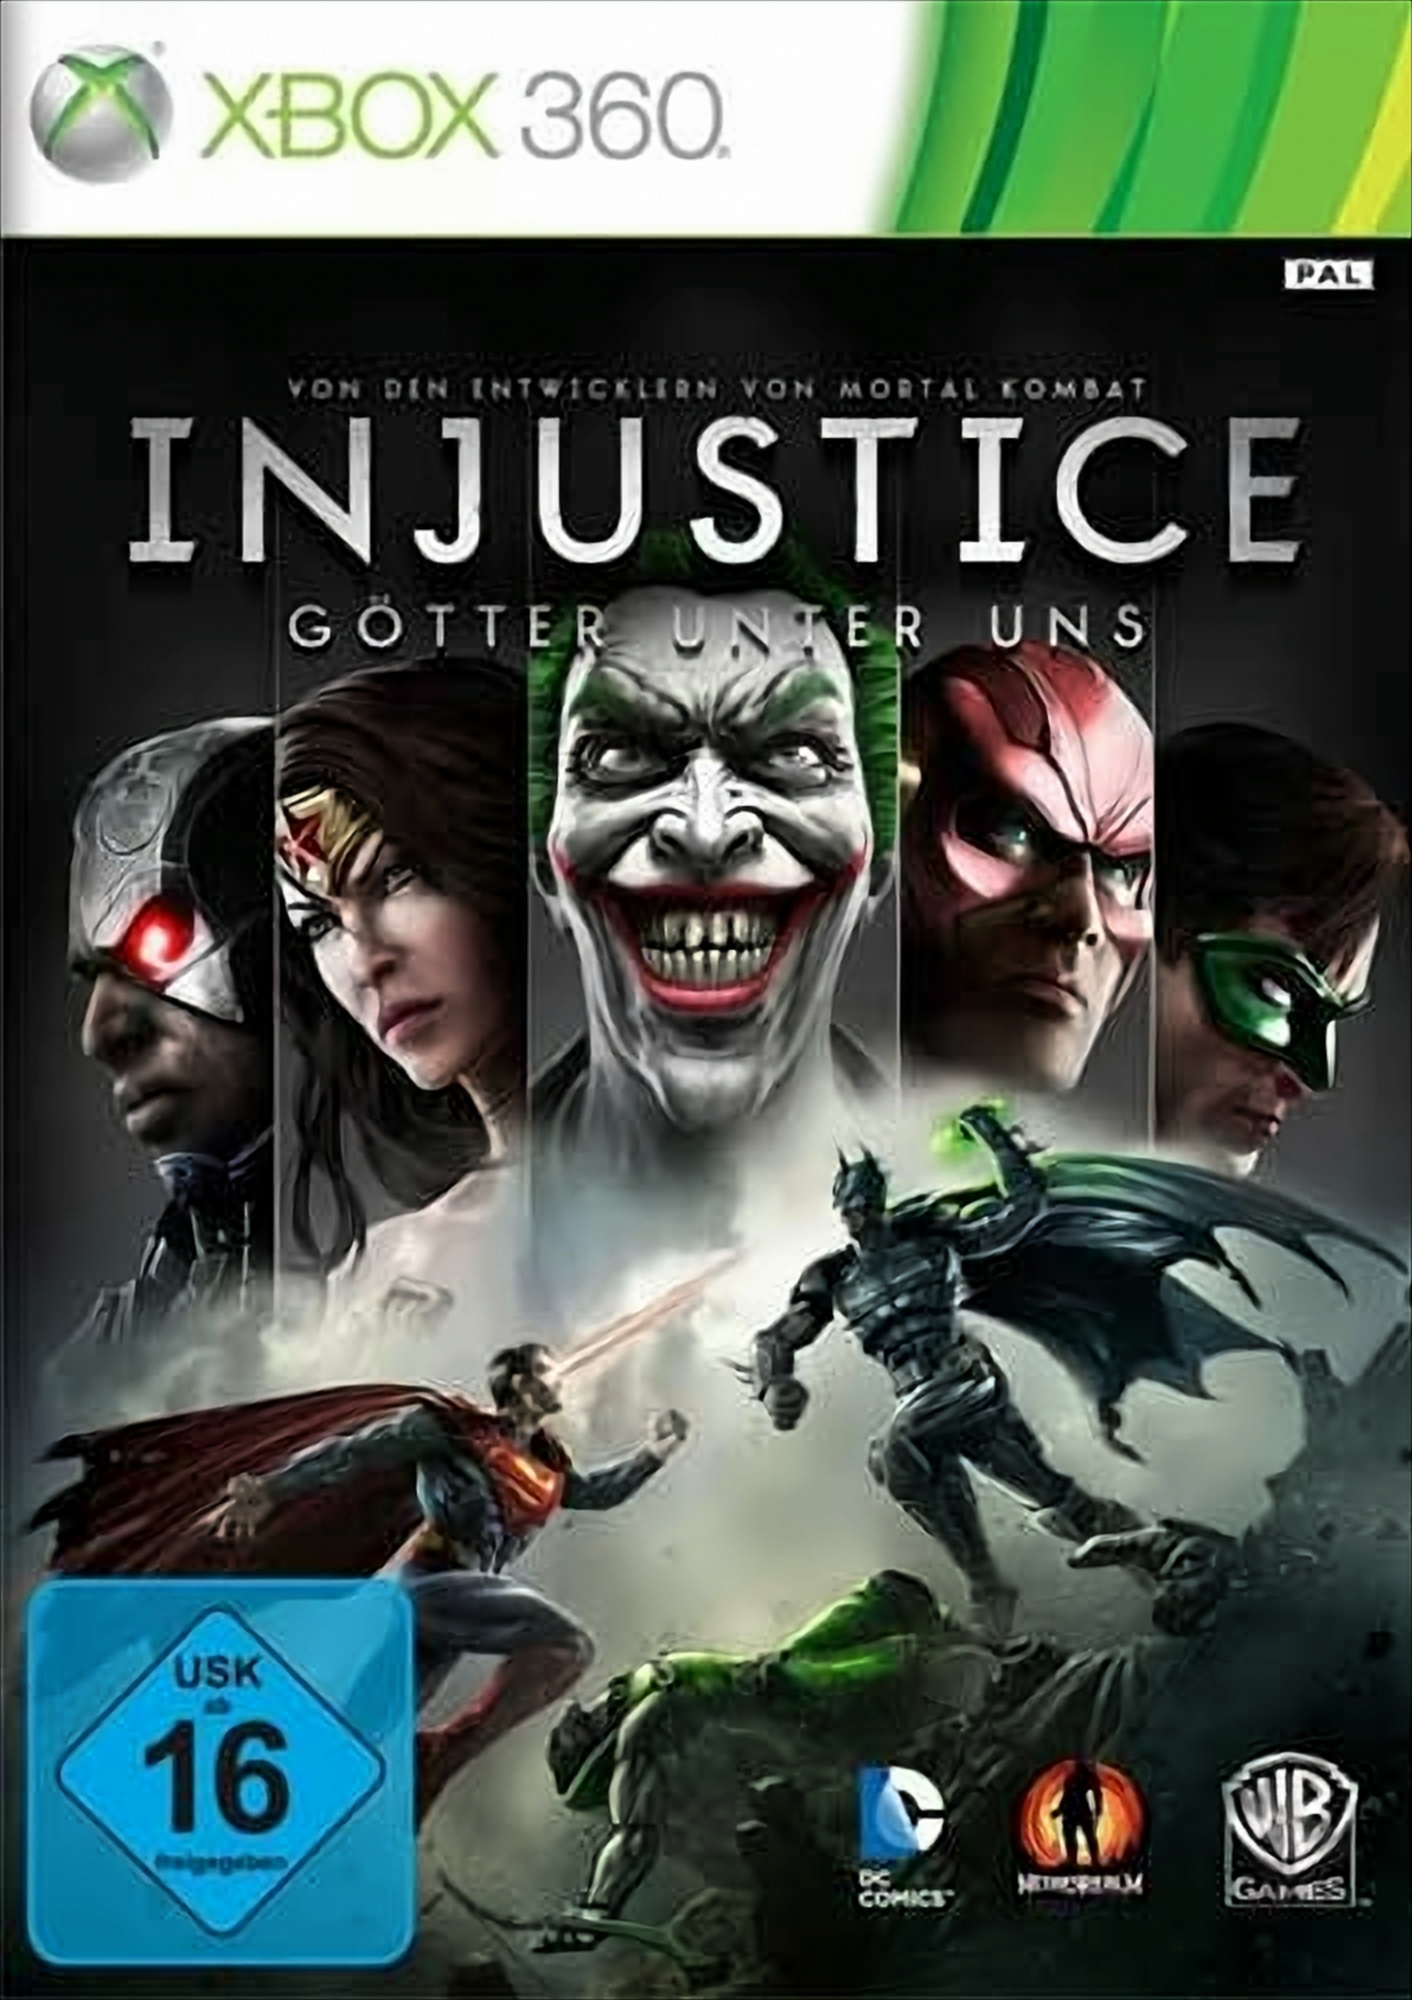 - 360] [Xbox unter Götter uns Injustice: